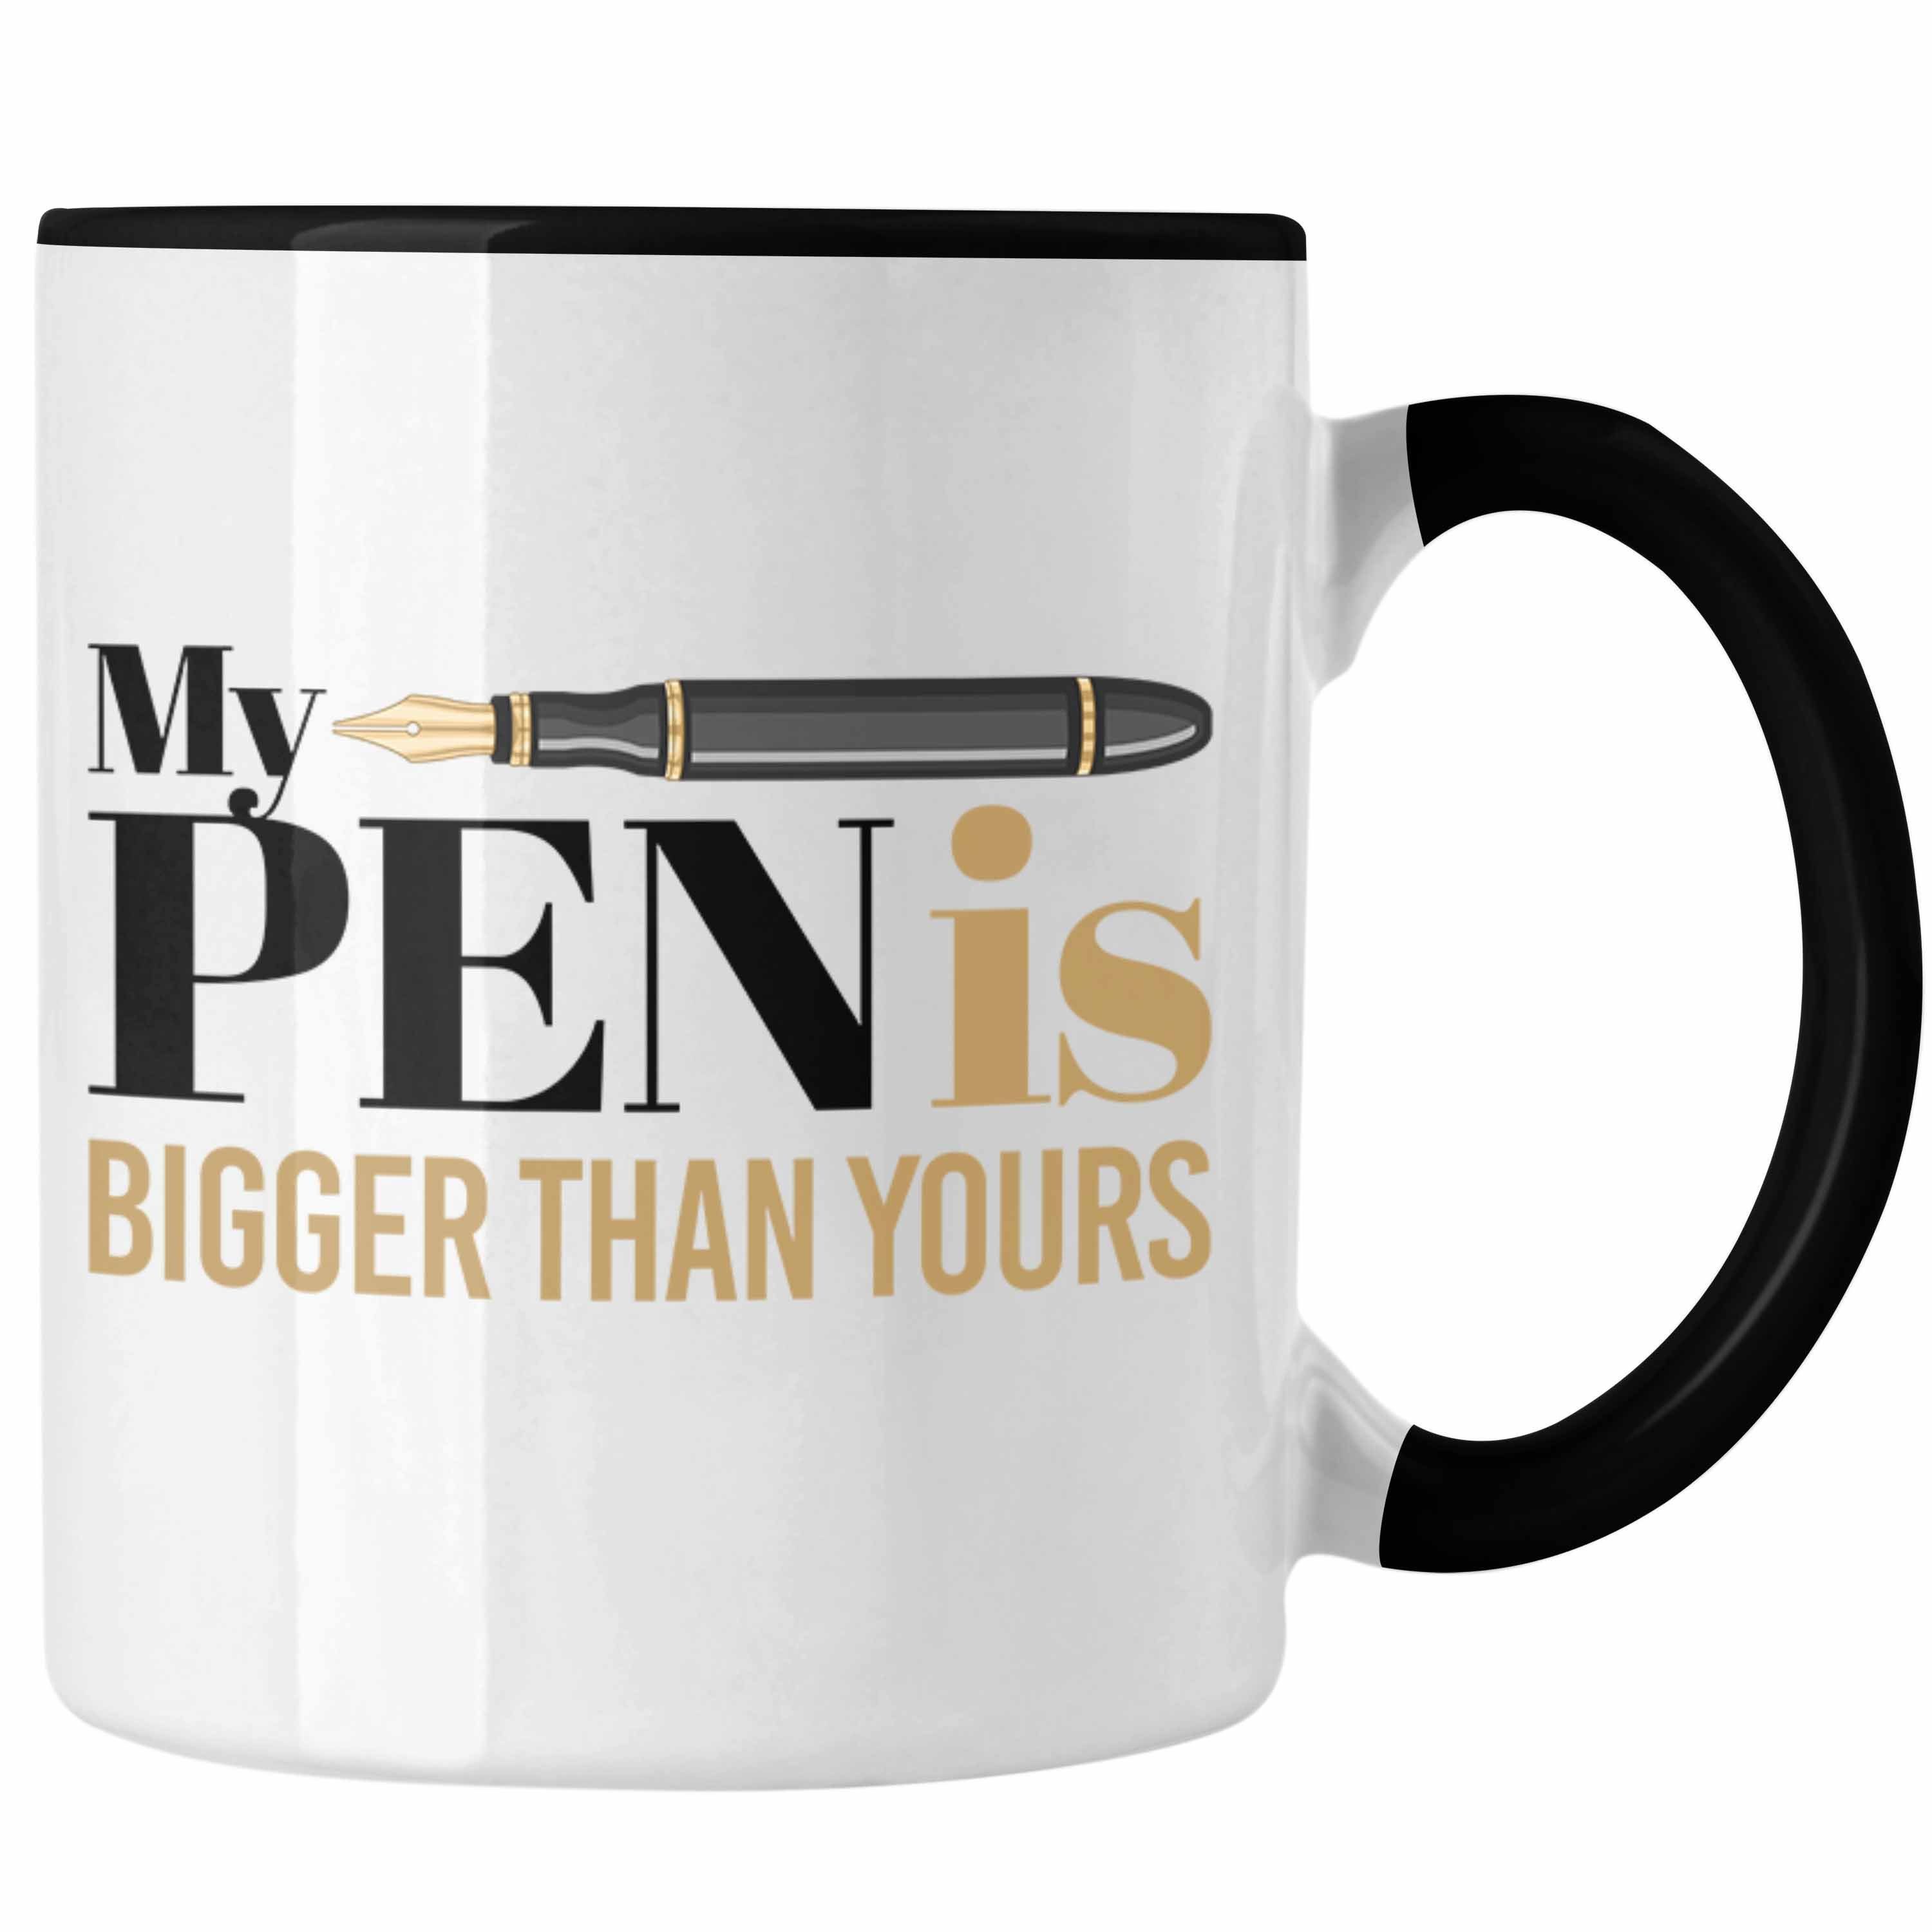 Trendation Tasse My Pen Is Bigger Than Your Tasse Geschenk Witziger Schwarz